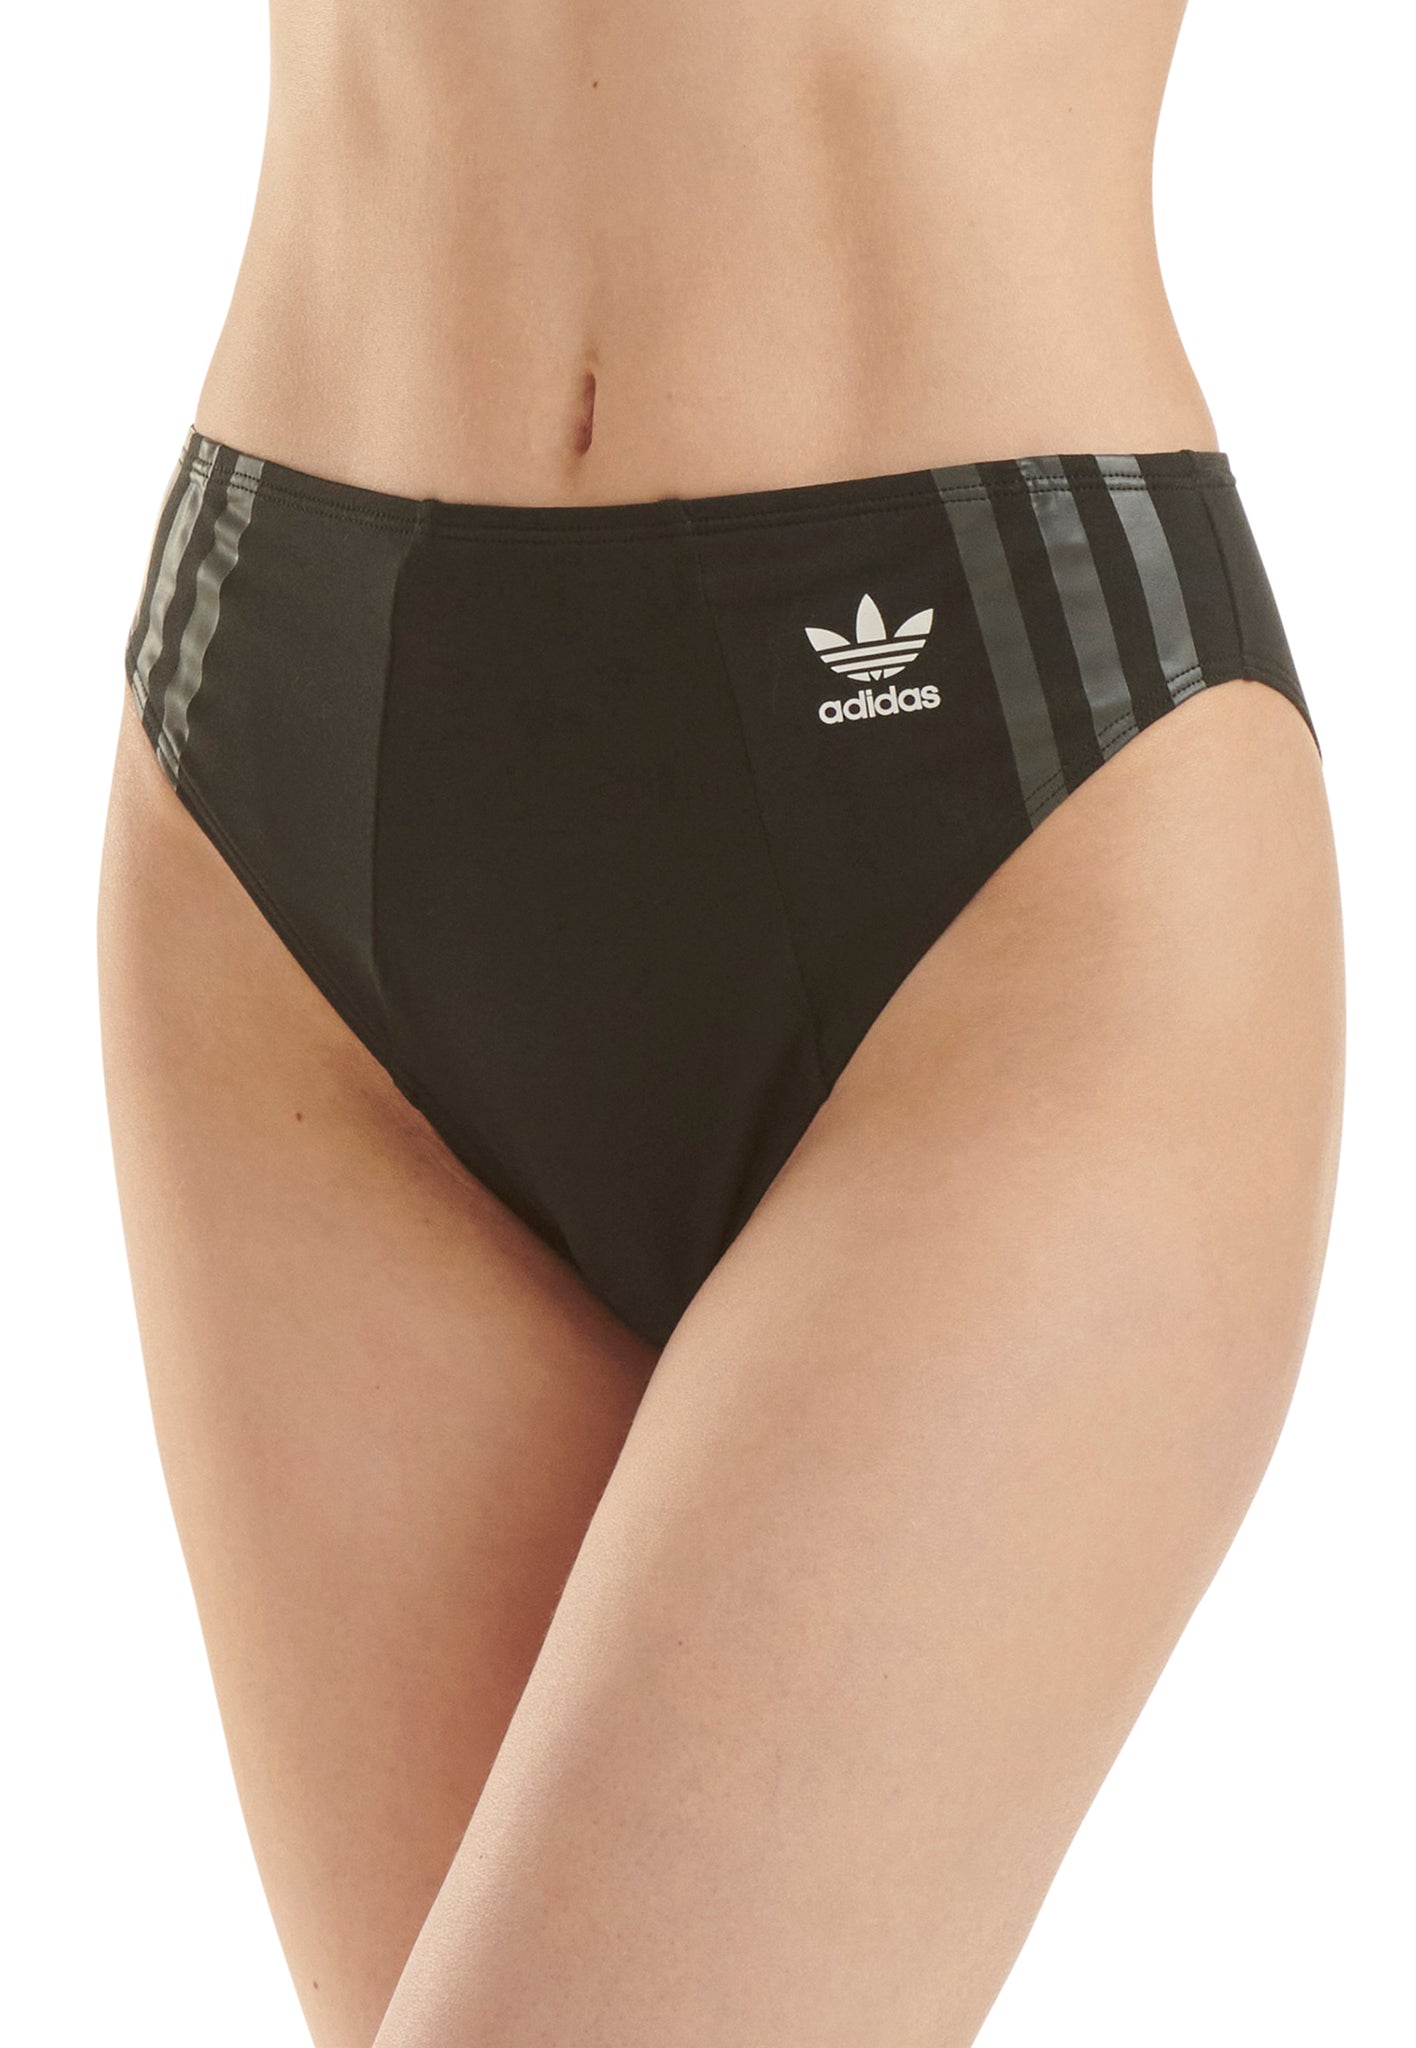 adidas Sports Underwear 720 Seamless Thong Women - 302-toasted mocha